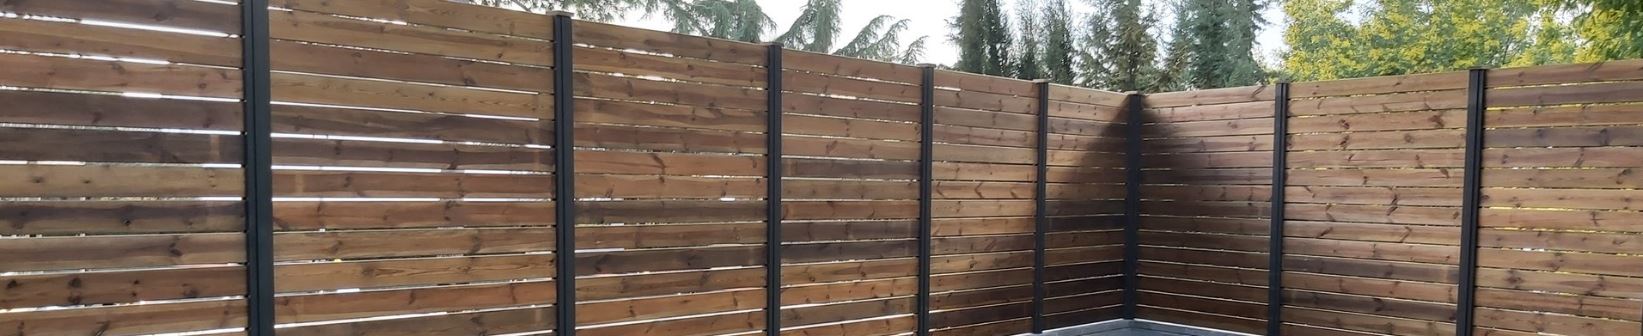 valla de madera tratada para exterior